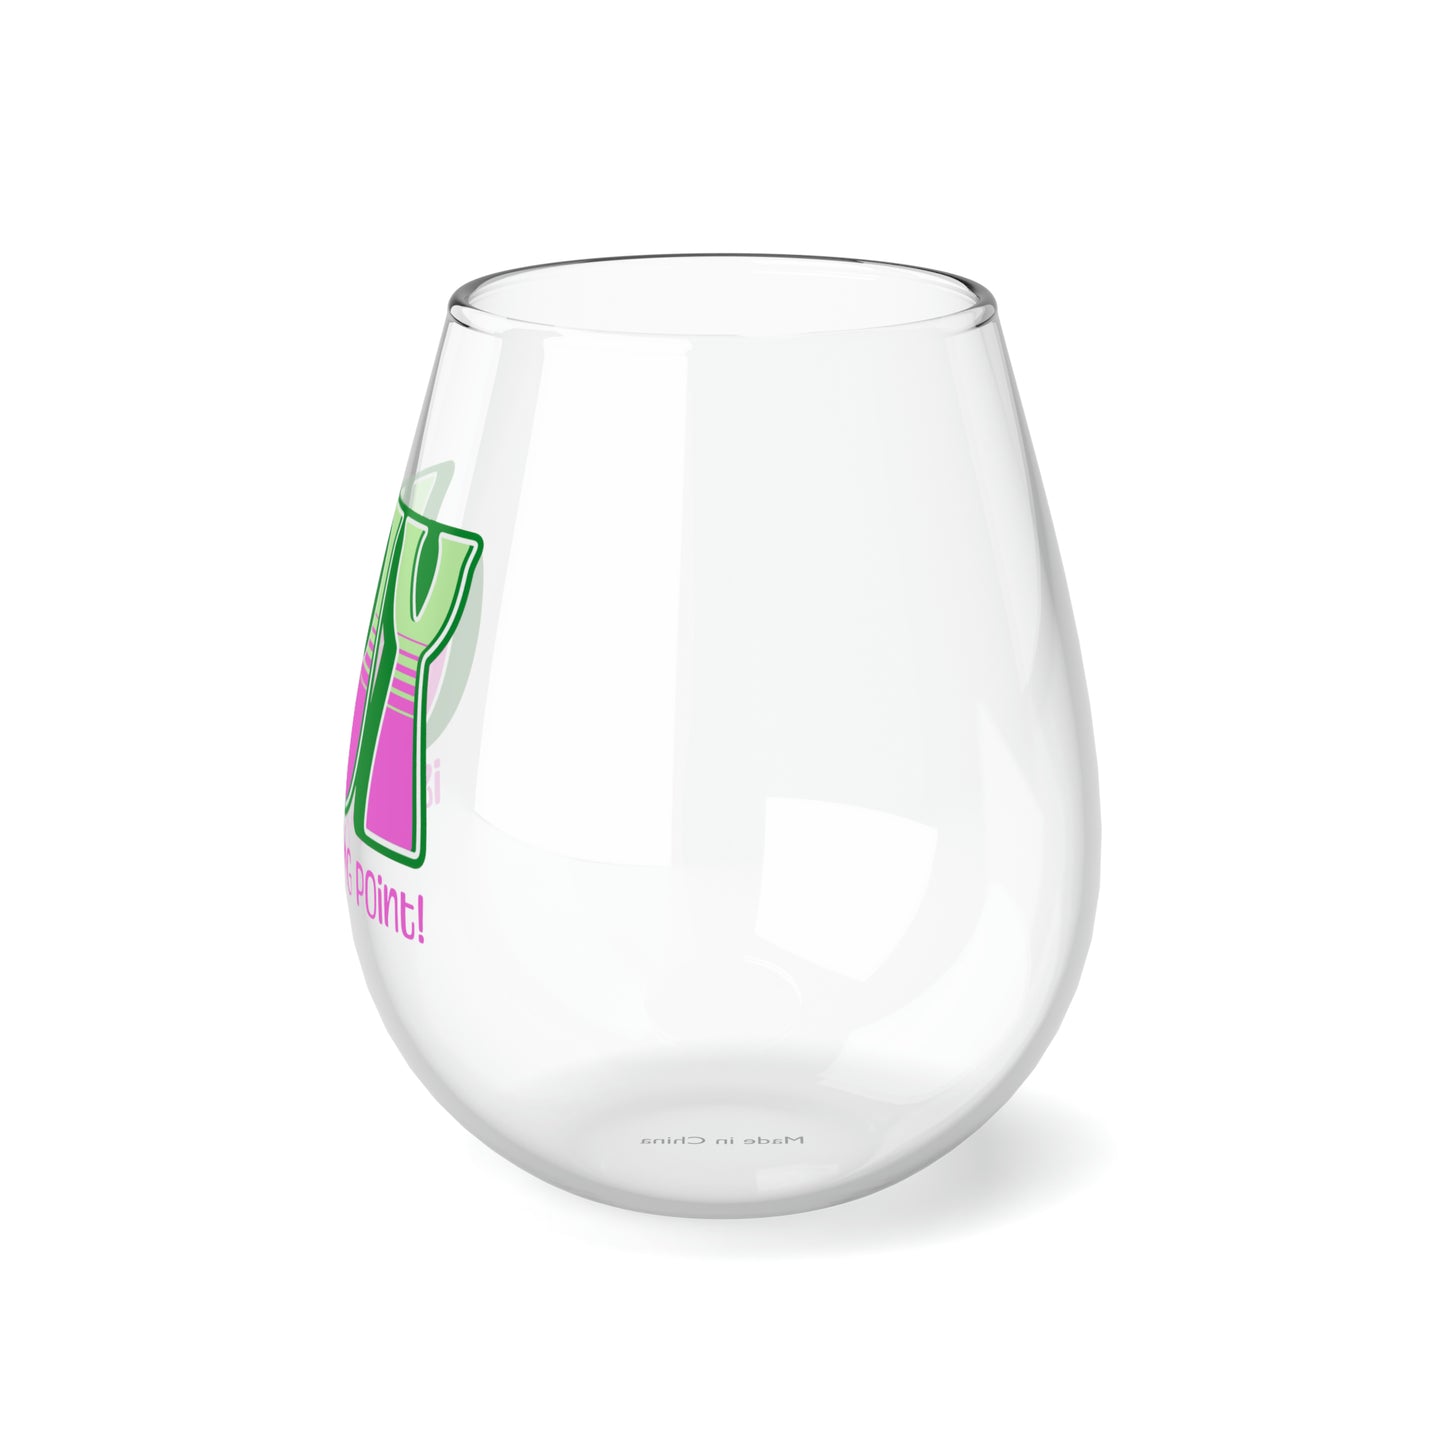 JOY (green pink) Stemless Wine Glass, 11.75oz